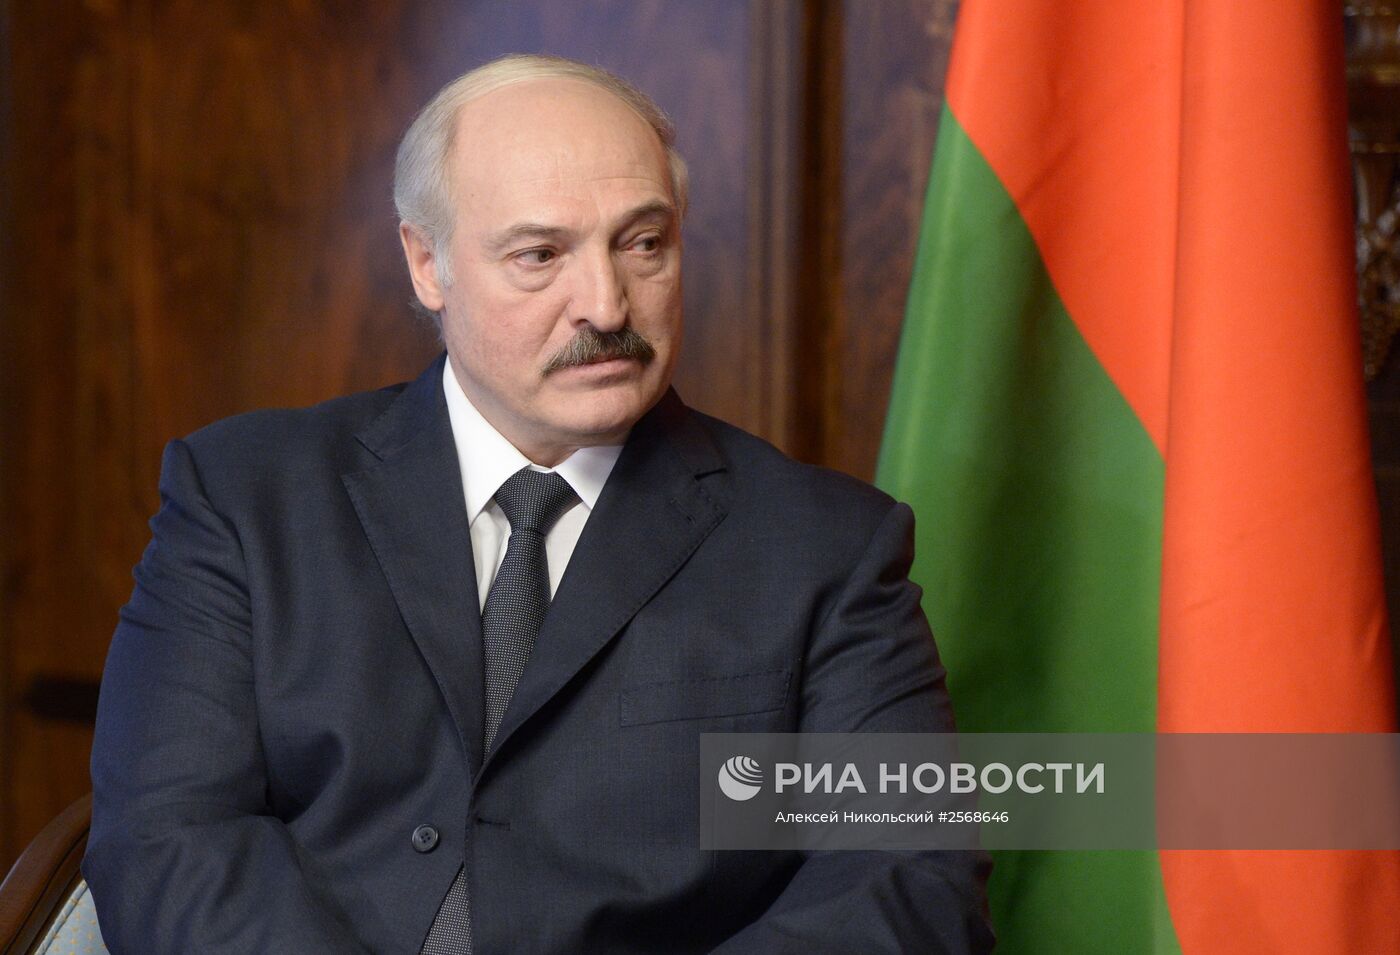 Президент РФ В.Путин встретился с президентом Белоруссии А.Лукашенко